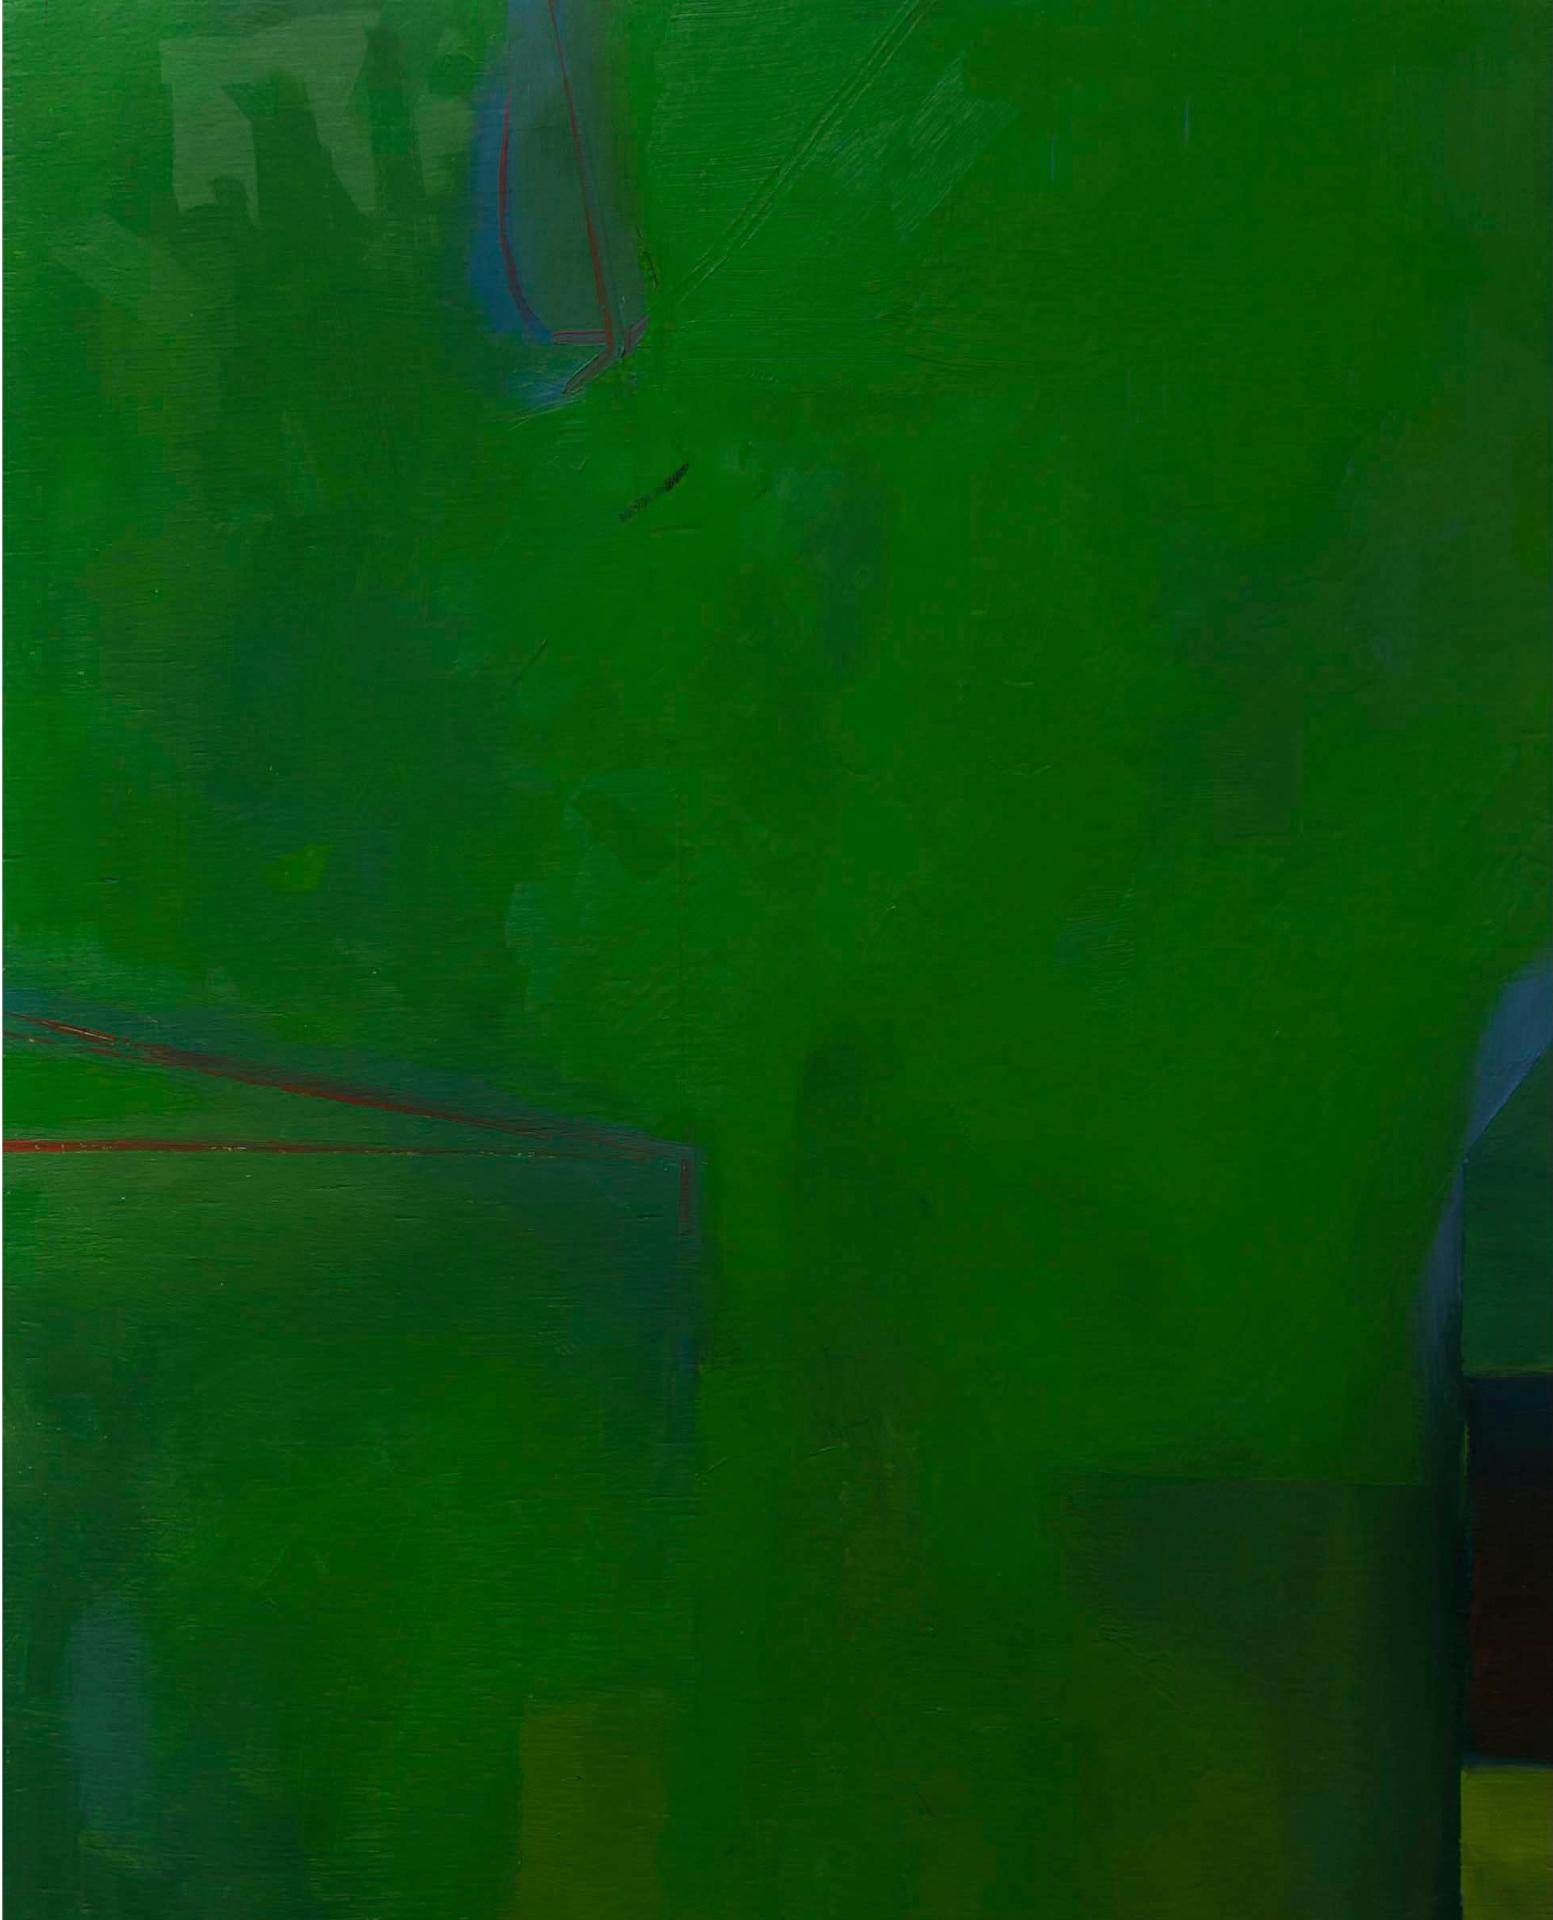 Kathryn Bemrose (1950) - The Green Won